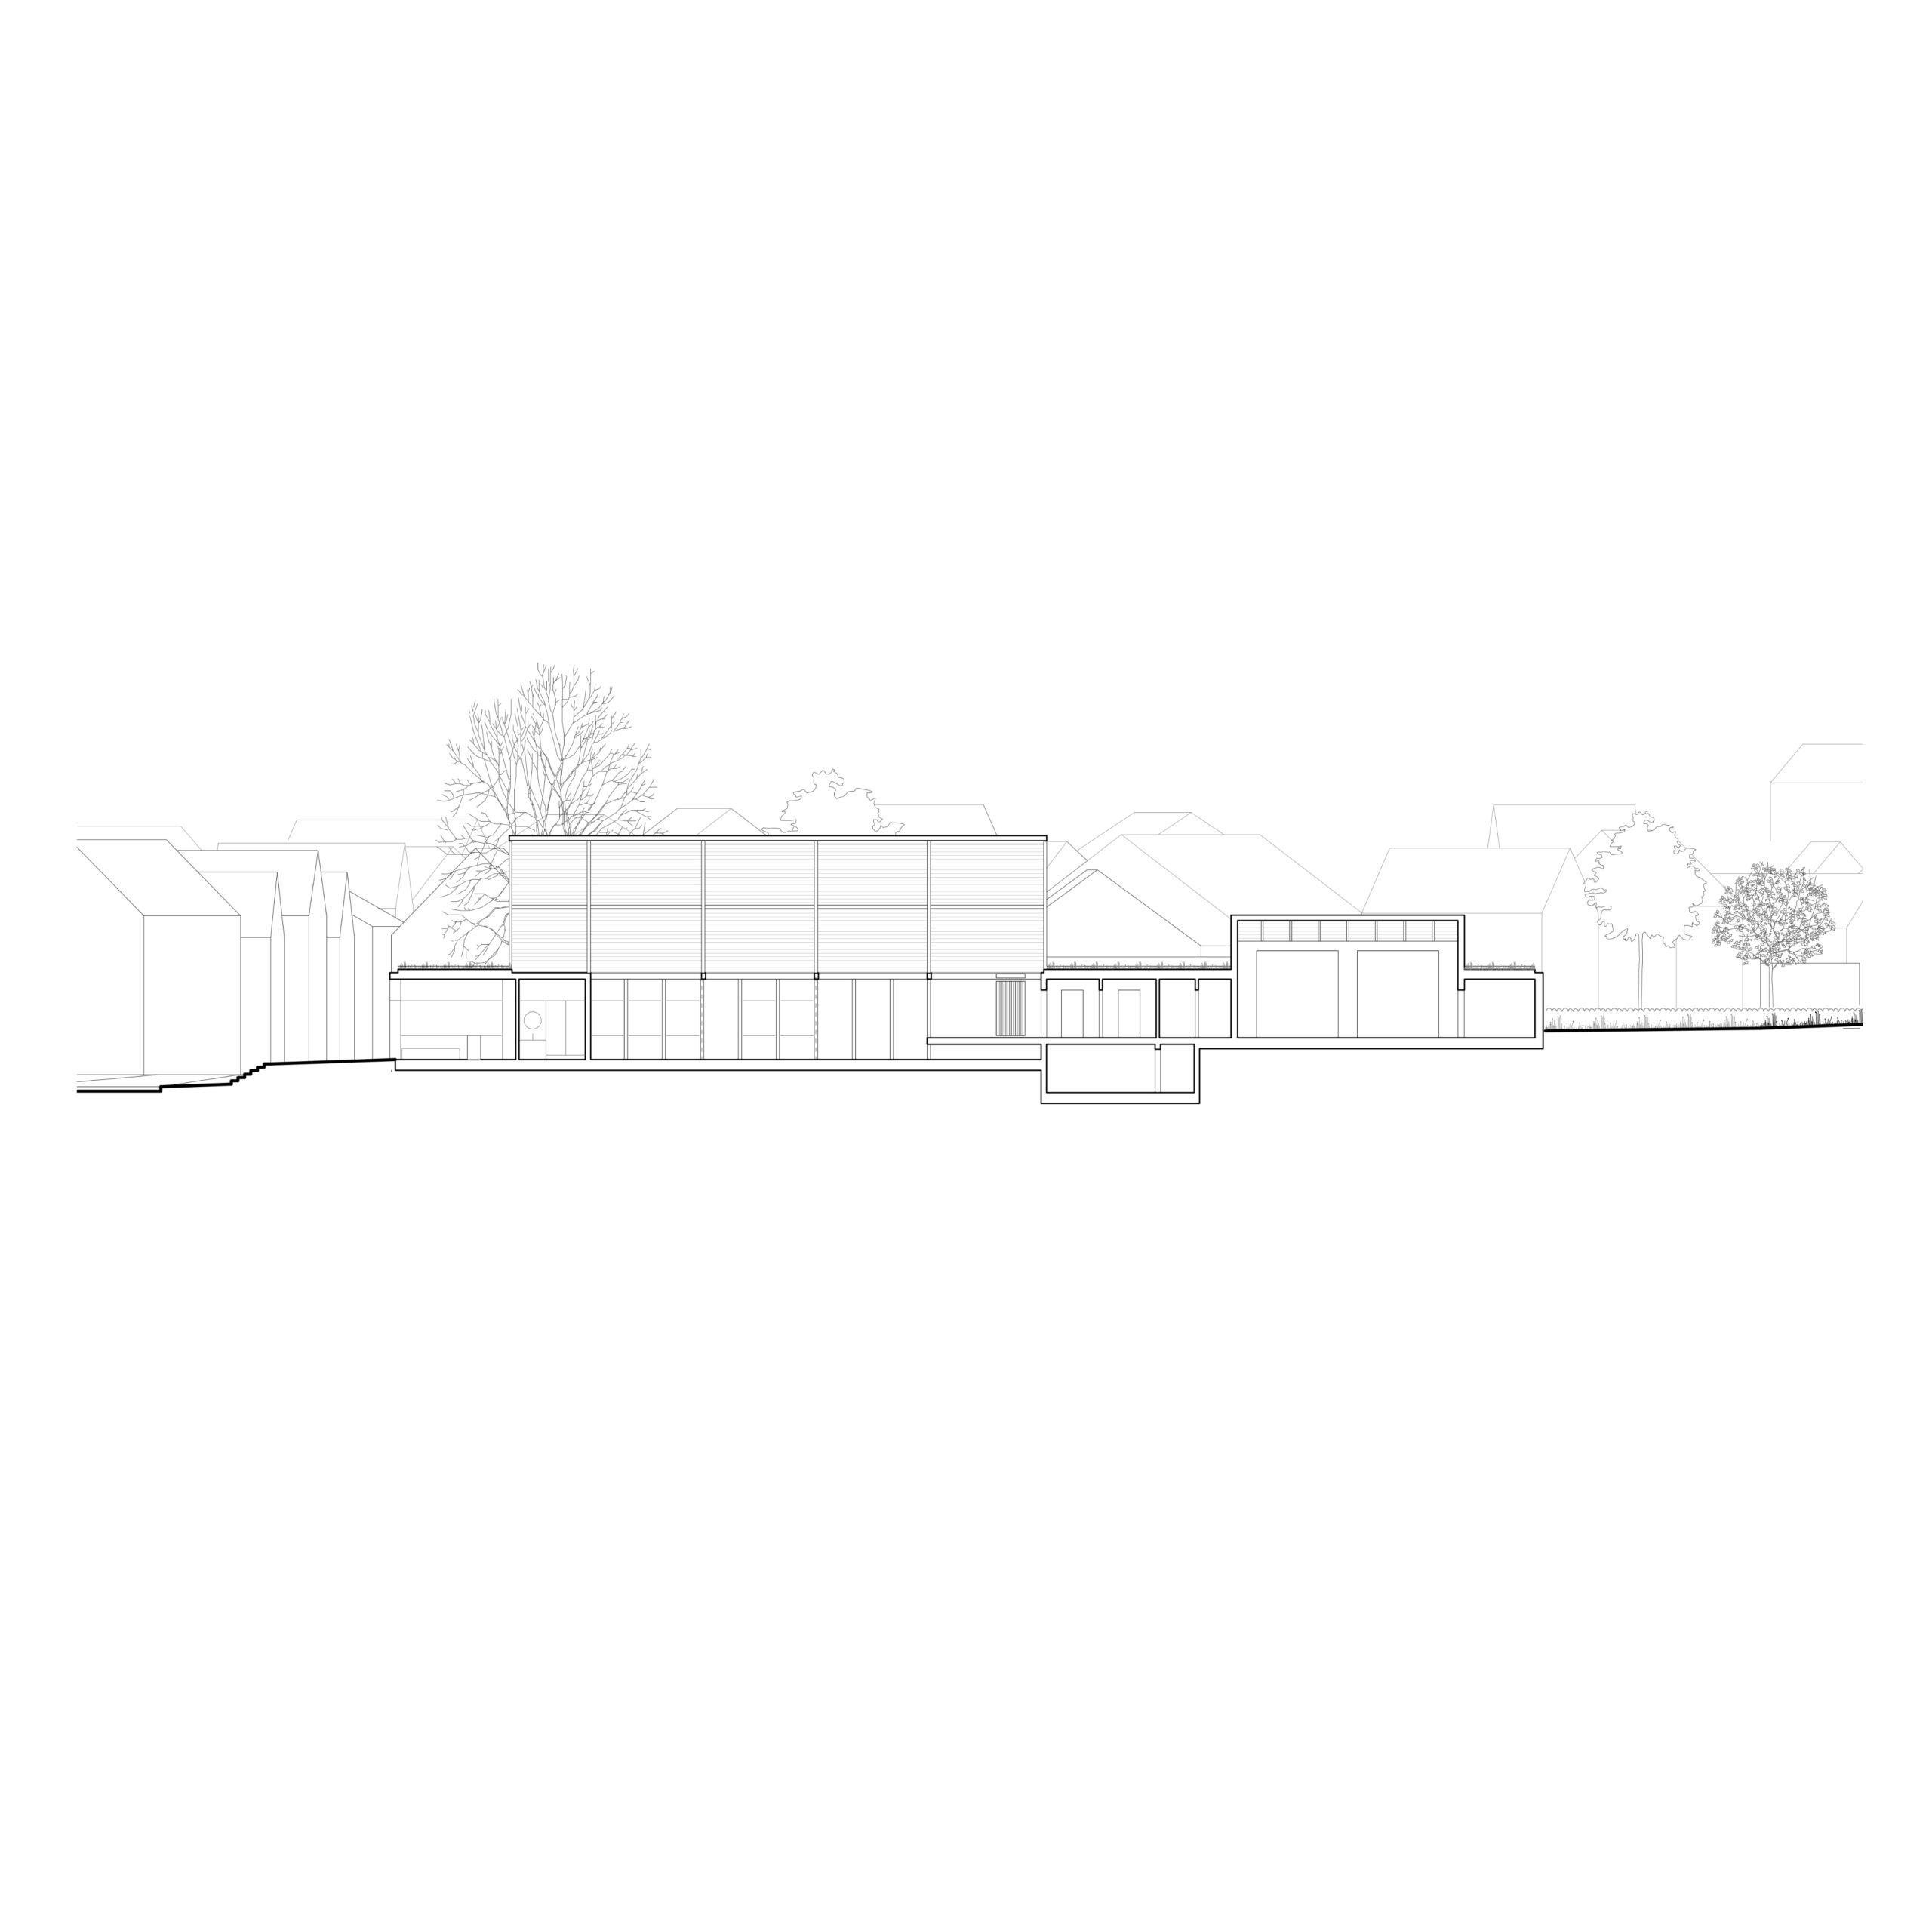 DGH Lich-Bettenhausen, LOA | Lars Otte Architektur